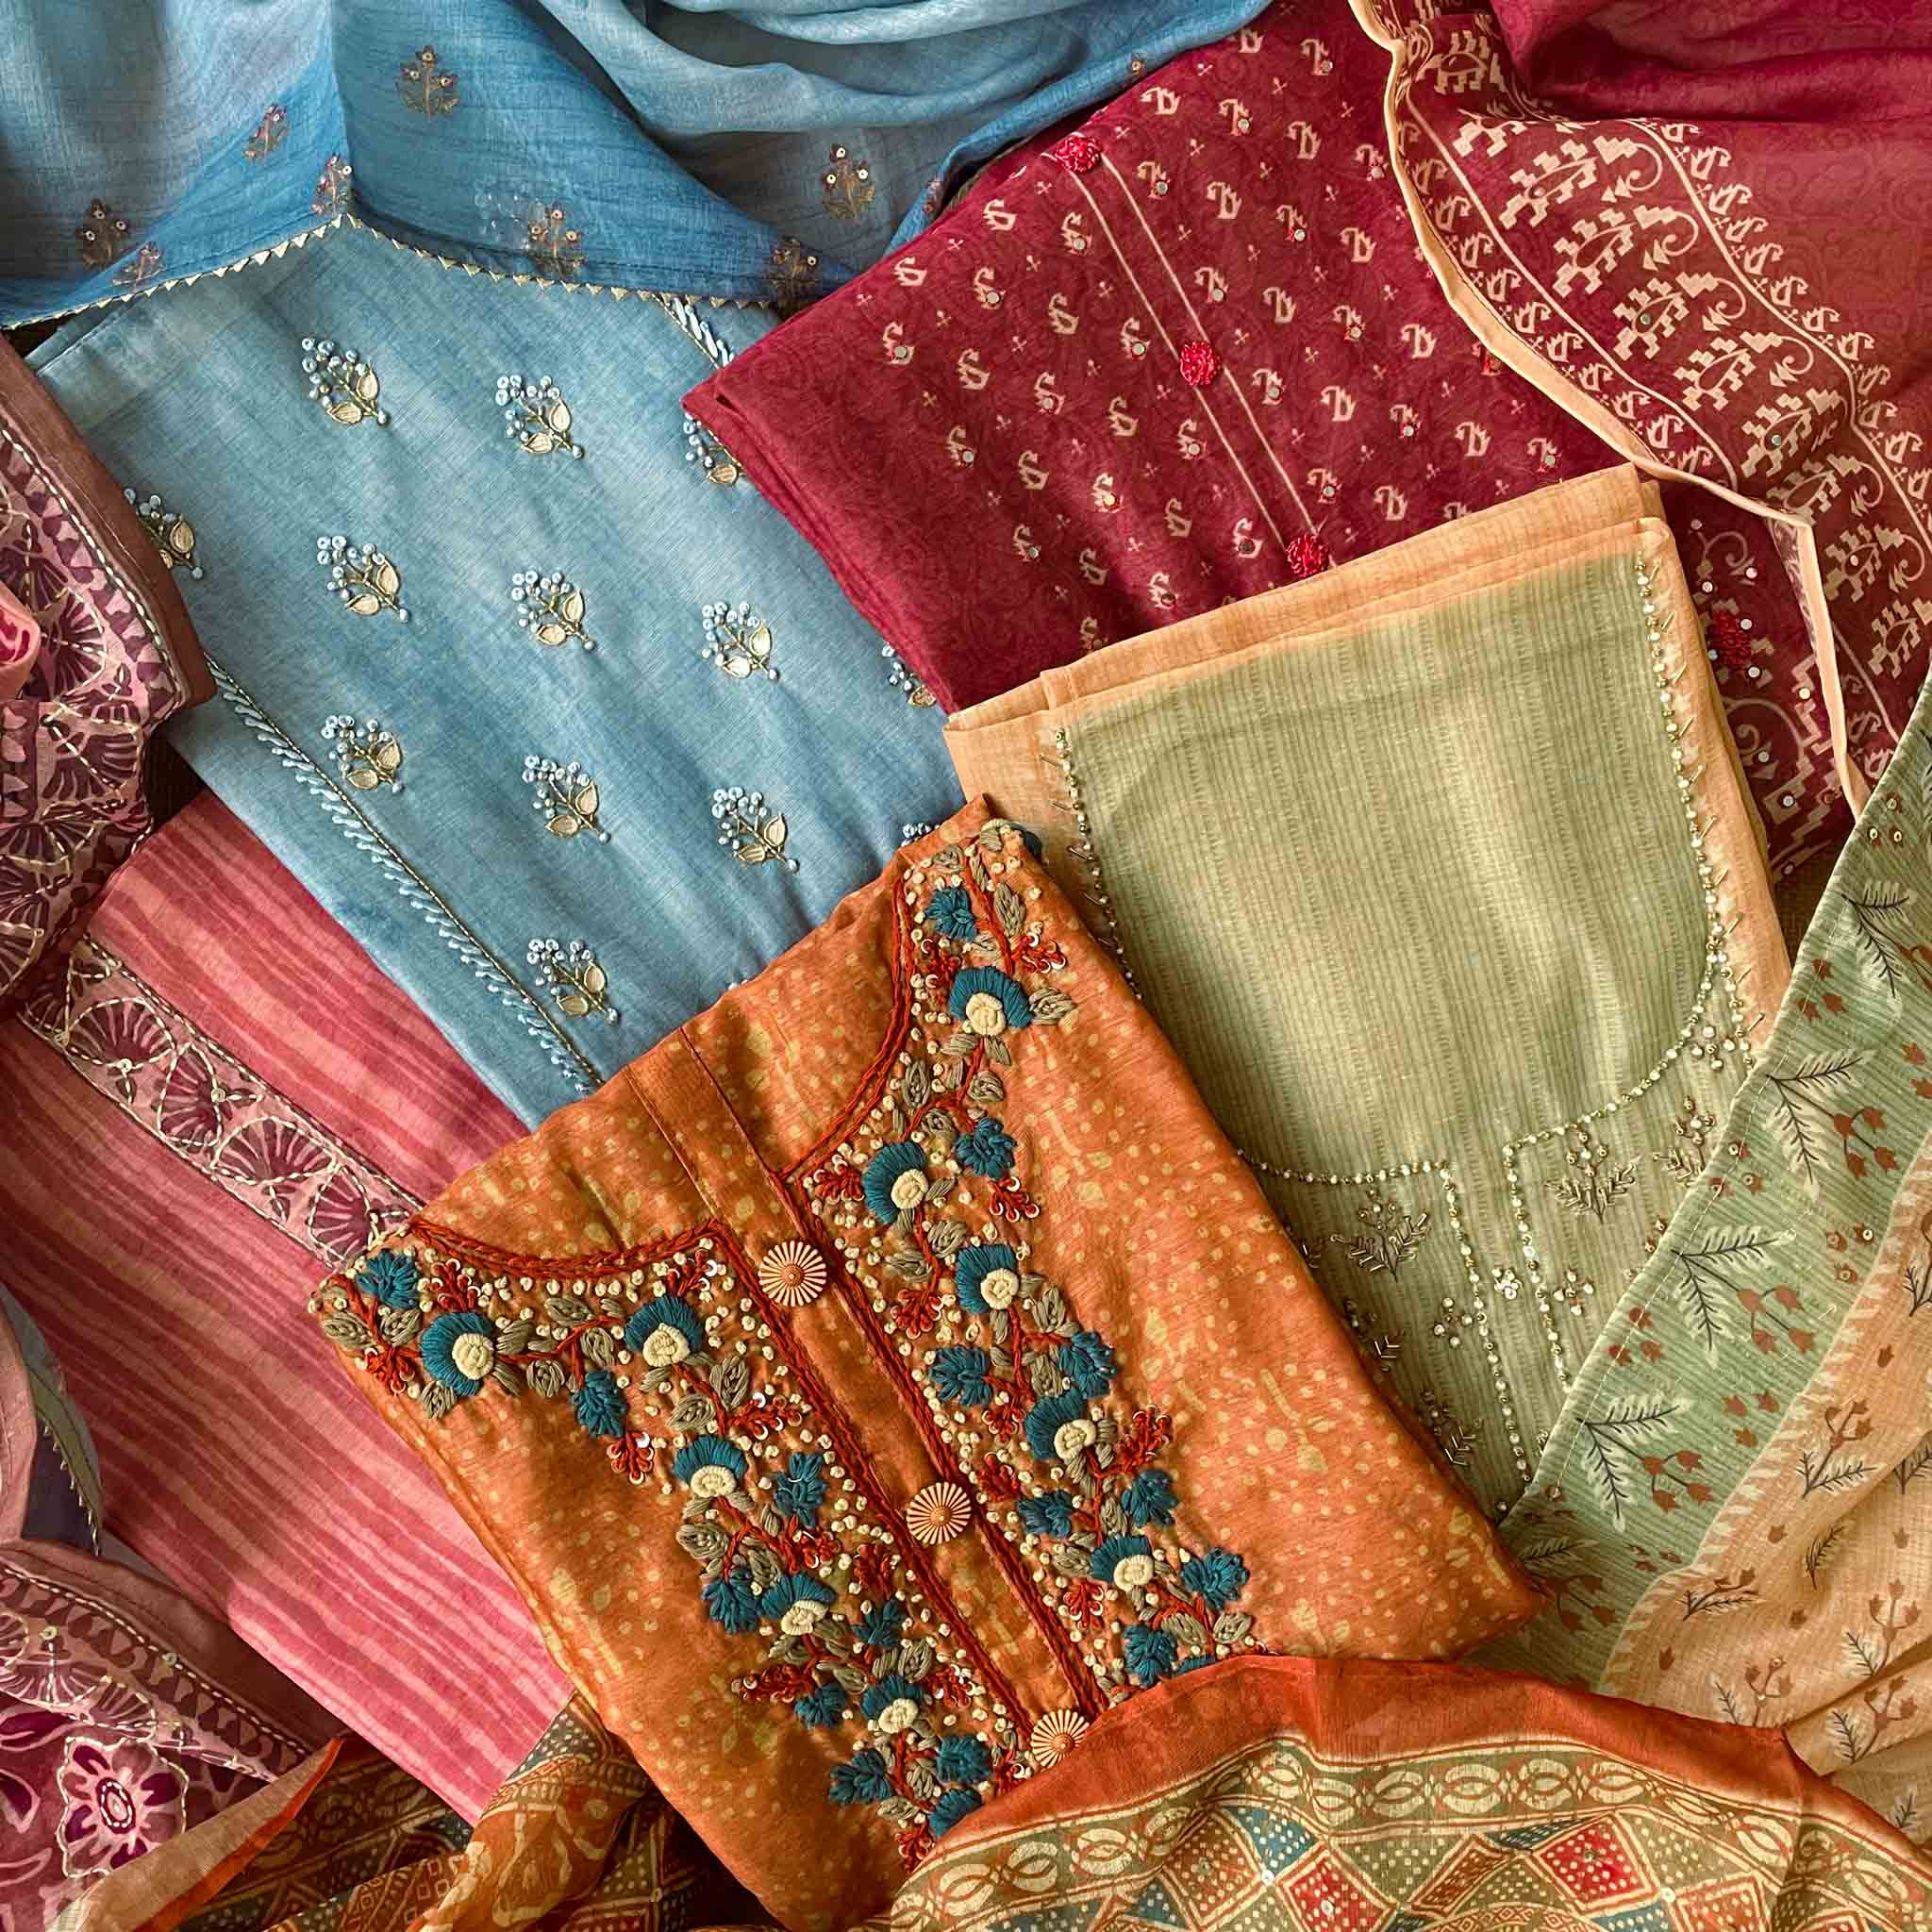 Bhagwan Poshak Fabric, For God Garments at Rs 155/meter in Surat | ID:  25385858412